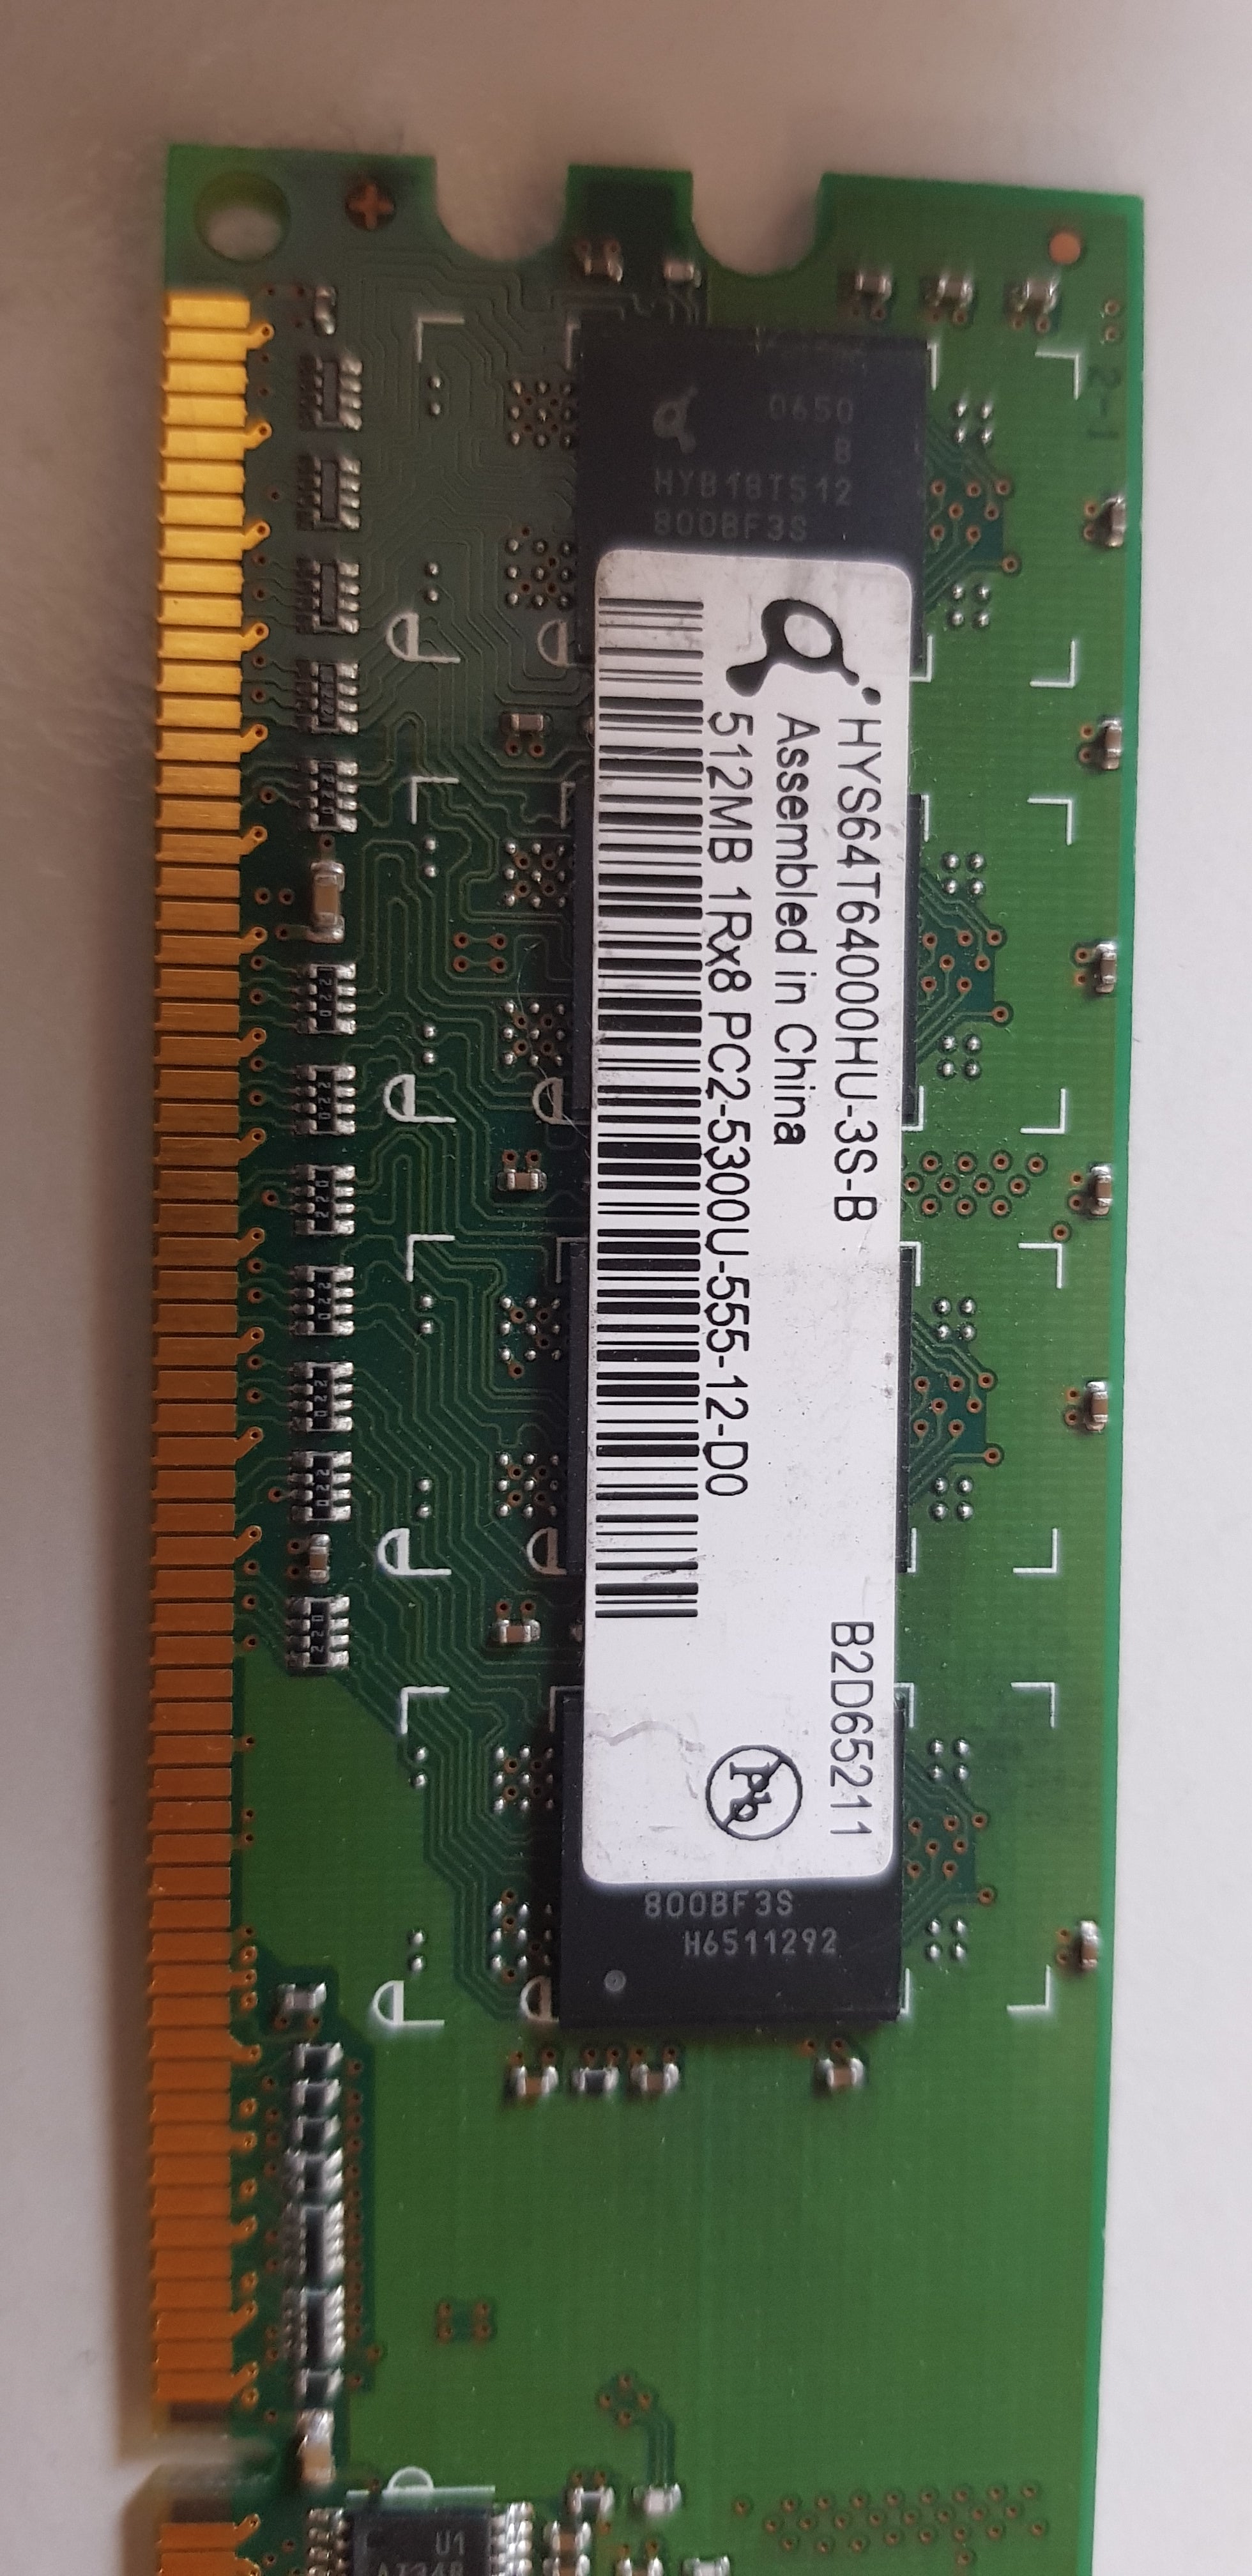 Qimonda 512MB 240p PC2-5300 CL5 8c 64x8 DDR2-667 DIMM Memory Module (HYS64T64000HU-3S-B)